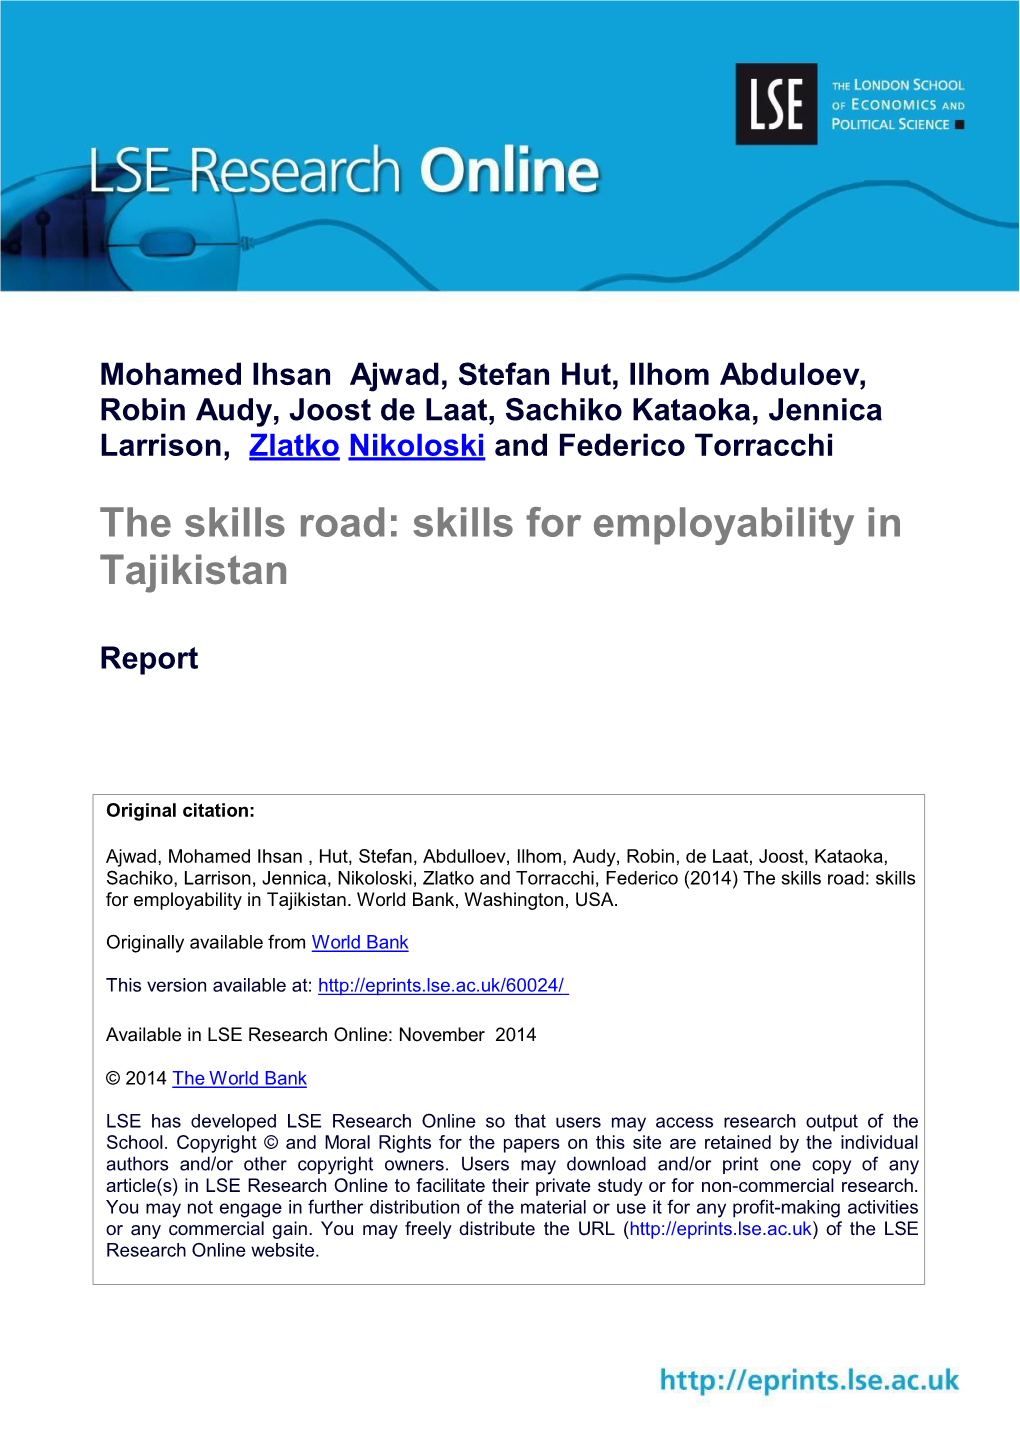 The Skills Road: Skills for Employability in Tajikistan